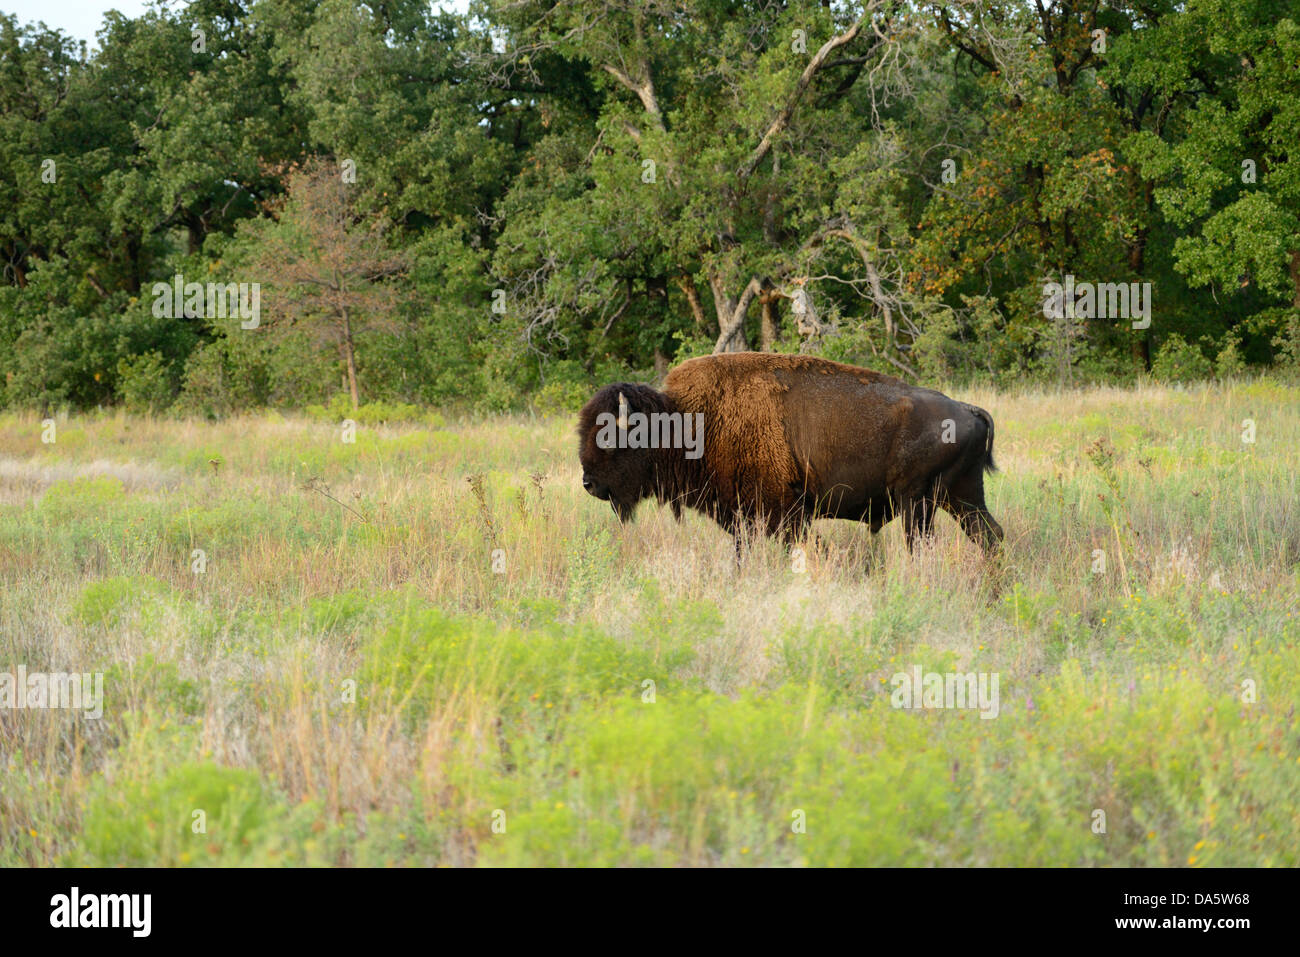 USA, United States, America, North America, Oklahoma, Comanche, Cache, Bison, buffalo, animal, Bos bison, prairie, grassland, pl Stock Photo